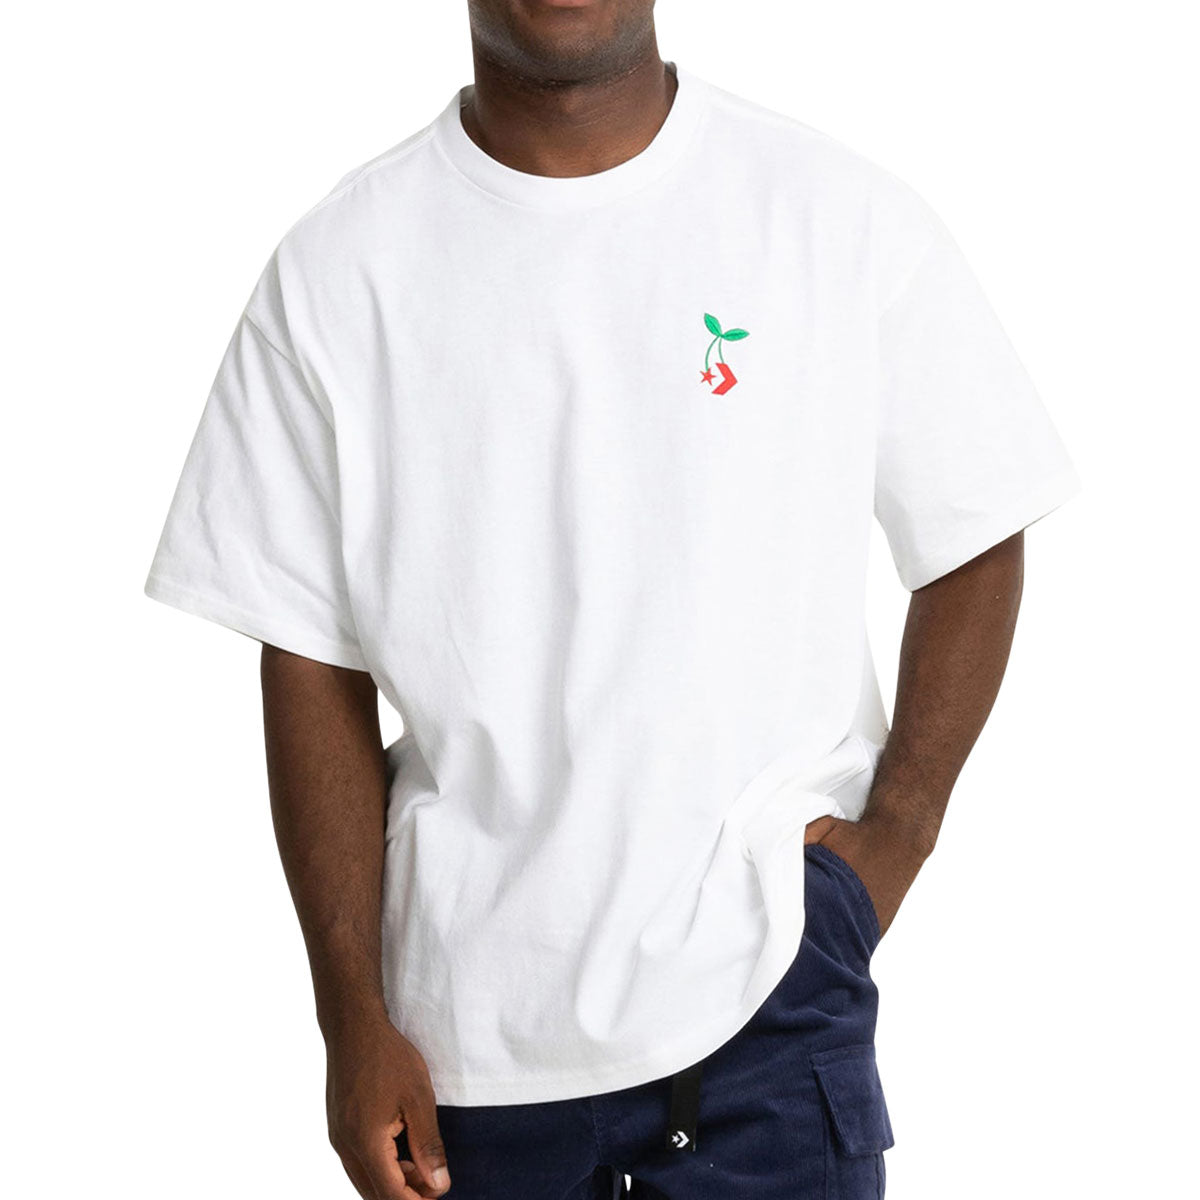 Converse Star Chevron Cherry Loose Fit T-Shirt - White image 2